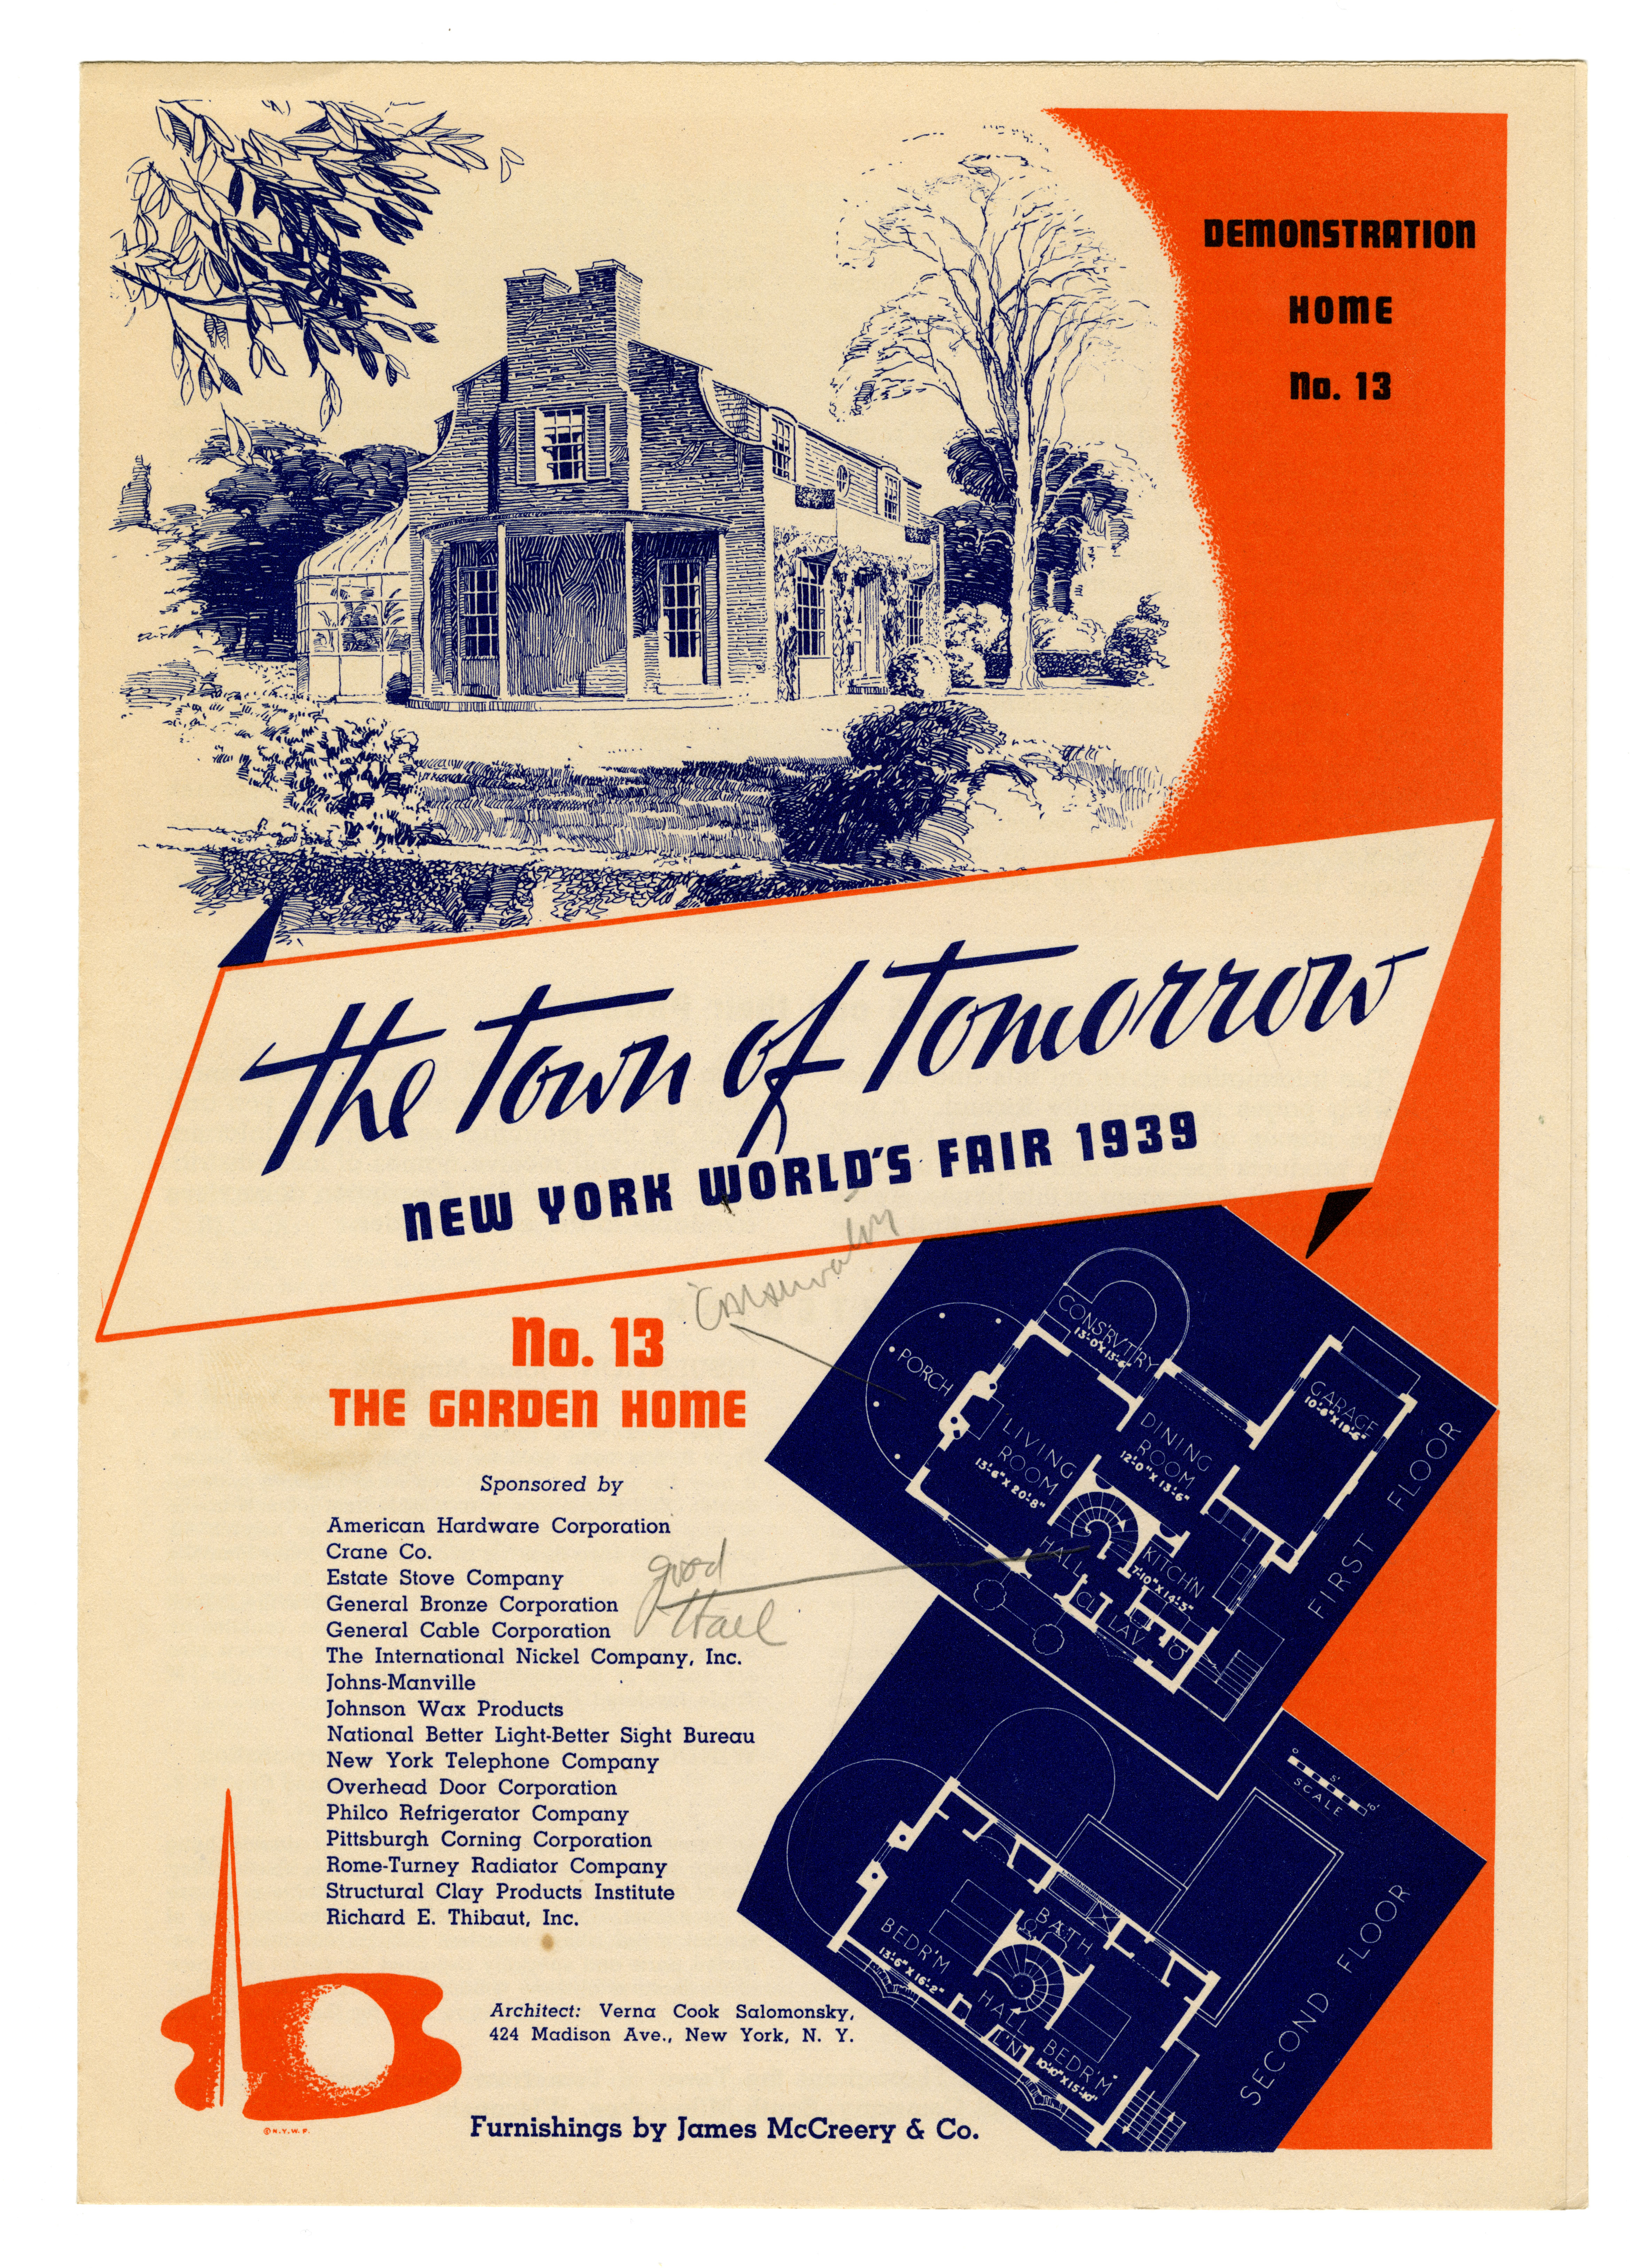 Demonstration Home Brochure No. 12, "Town of Tomorrow" Model Village, New York World's Fair, 1939. Designed by Verna Cook Salomonsky.